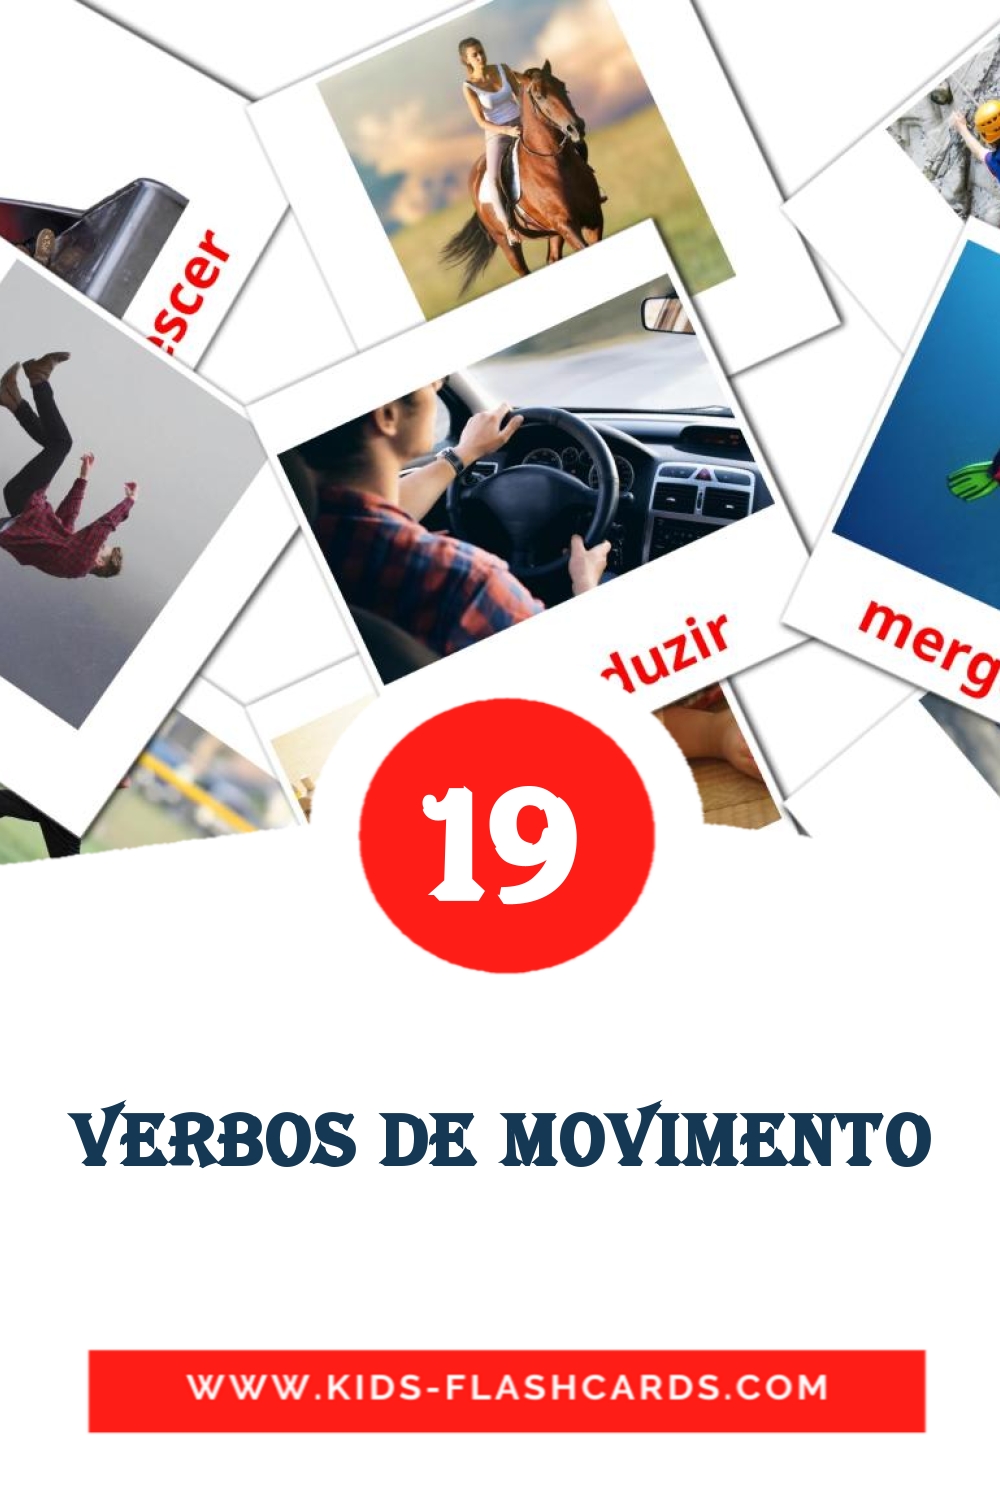 22 Verbos de movimento Picture Cards for Kindergarden in portuguese